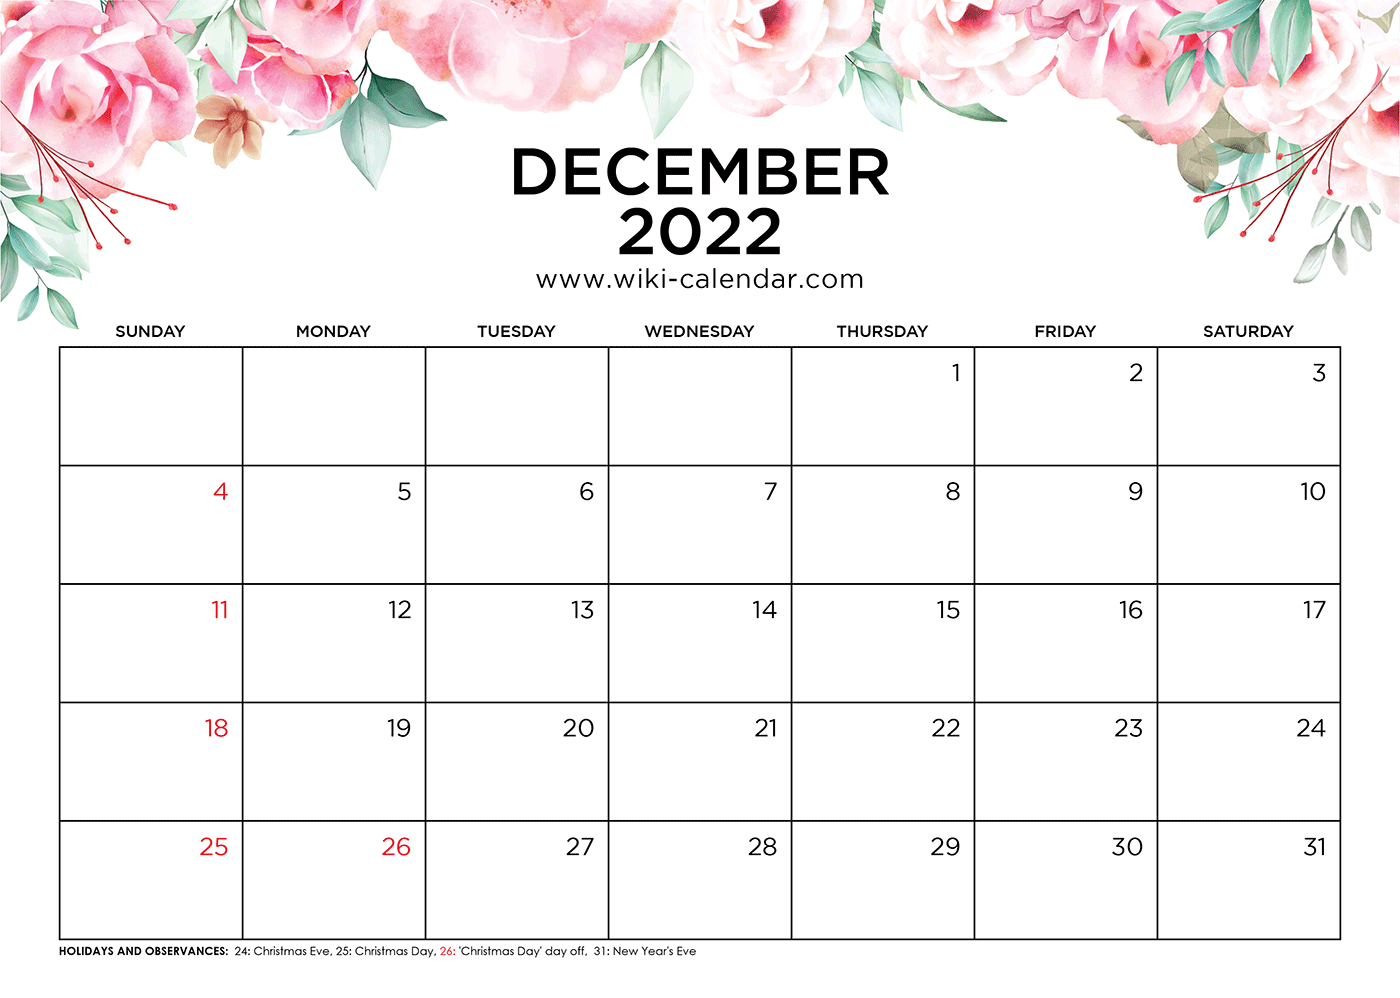 December Calendar For 2022 Free Printable December 2022 Calendars - Wiki Calendar